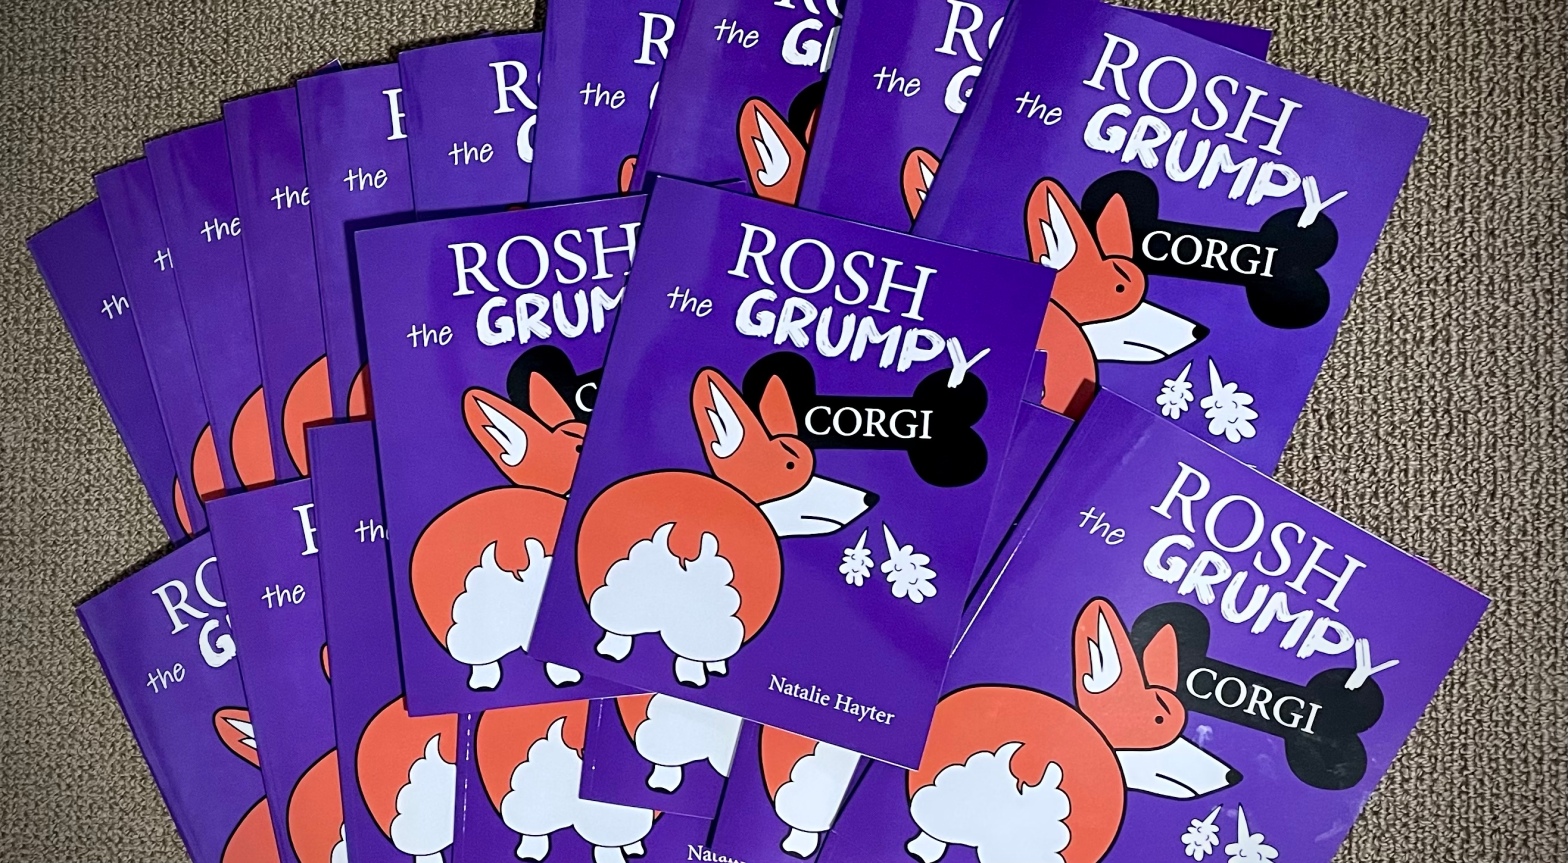 Rosh the Grumpy Corgi - Print book pile